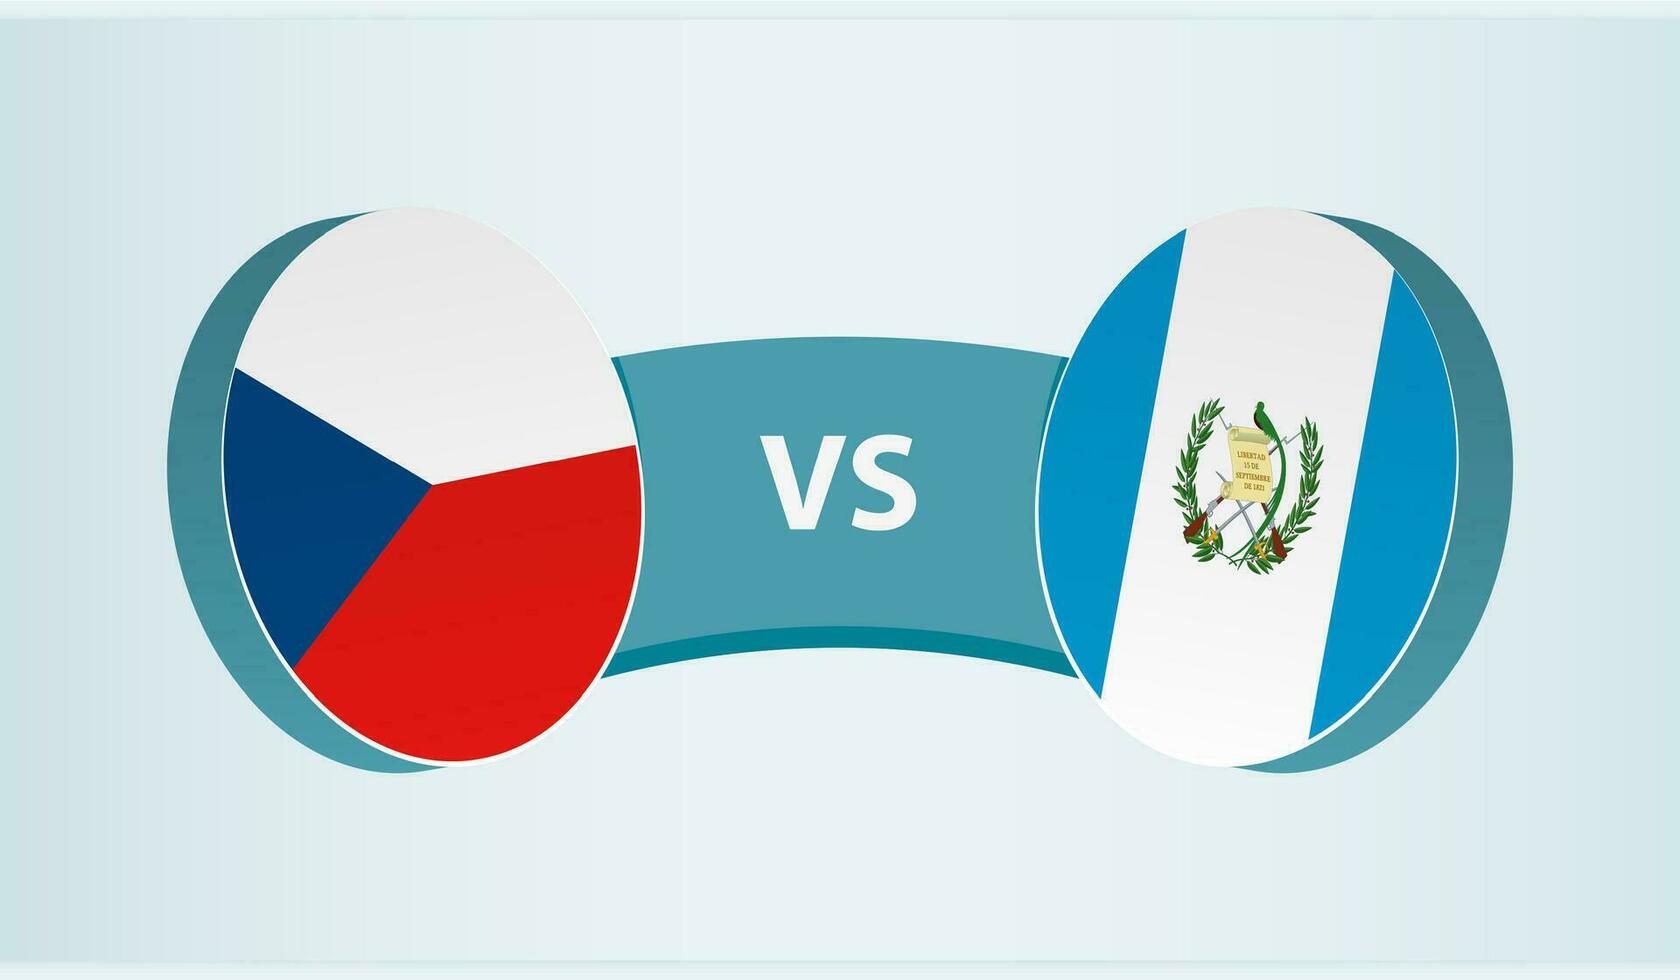 Czech Republic versus Guatemala, team sports competition concept. vector